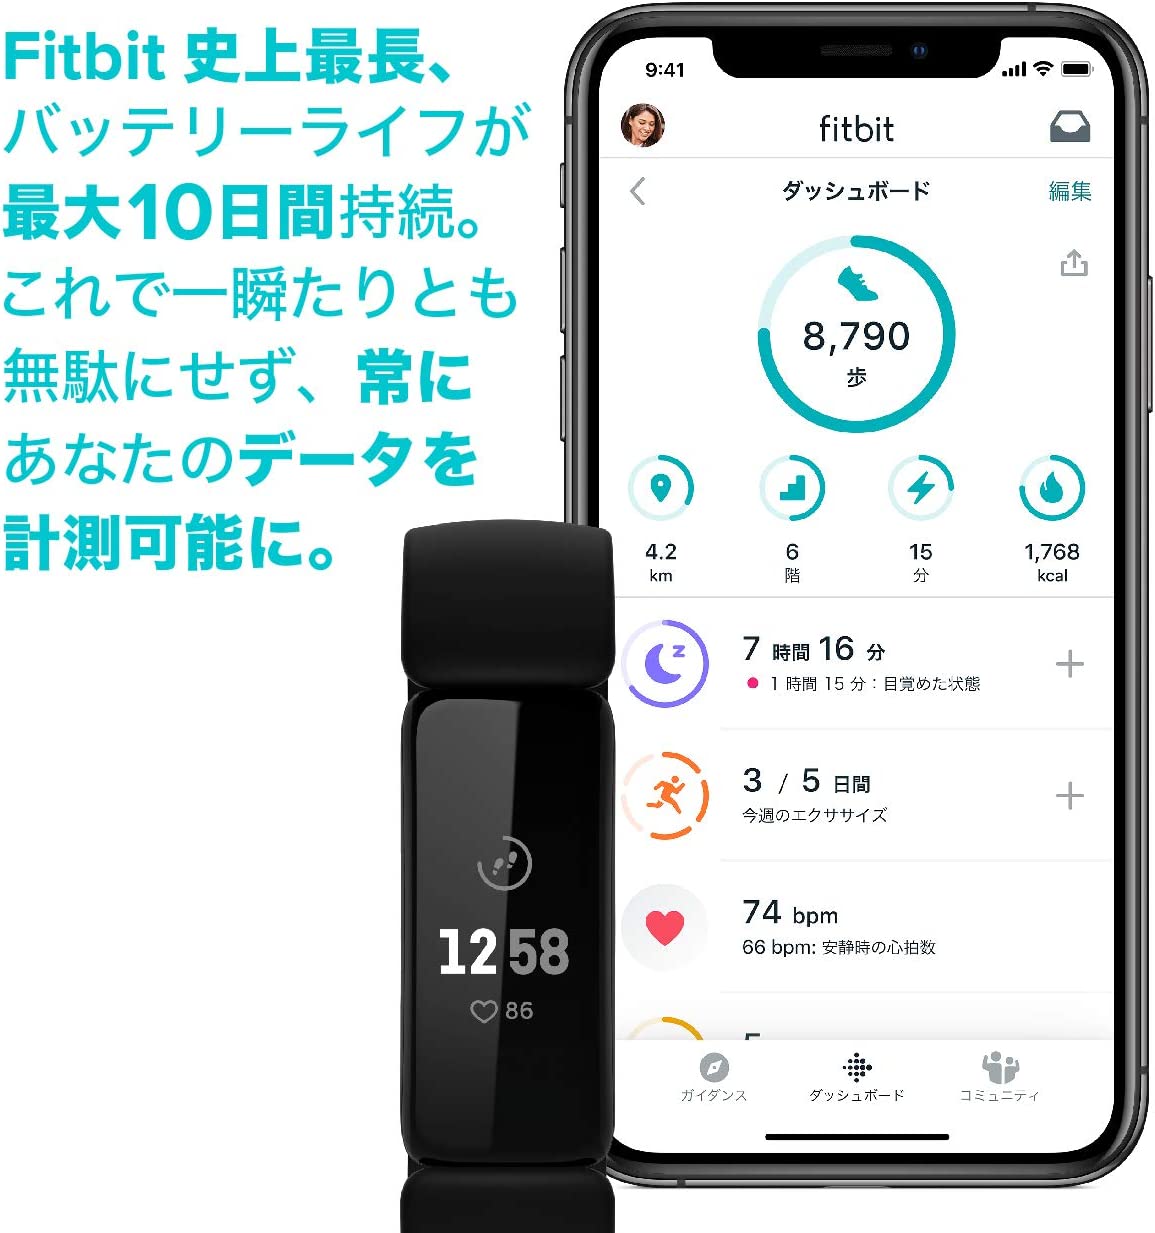 Fitbit Inspire 2 ブラック フィットビット fitbit スマートウォッチ